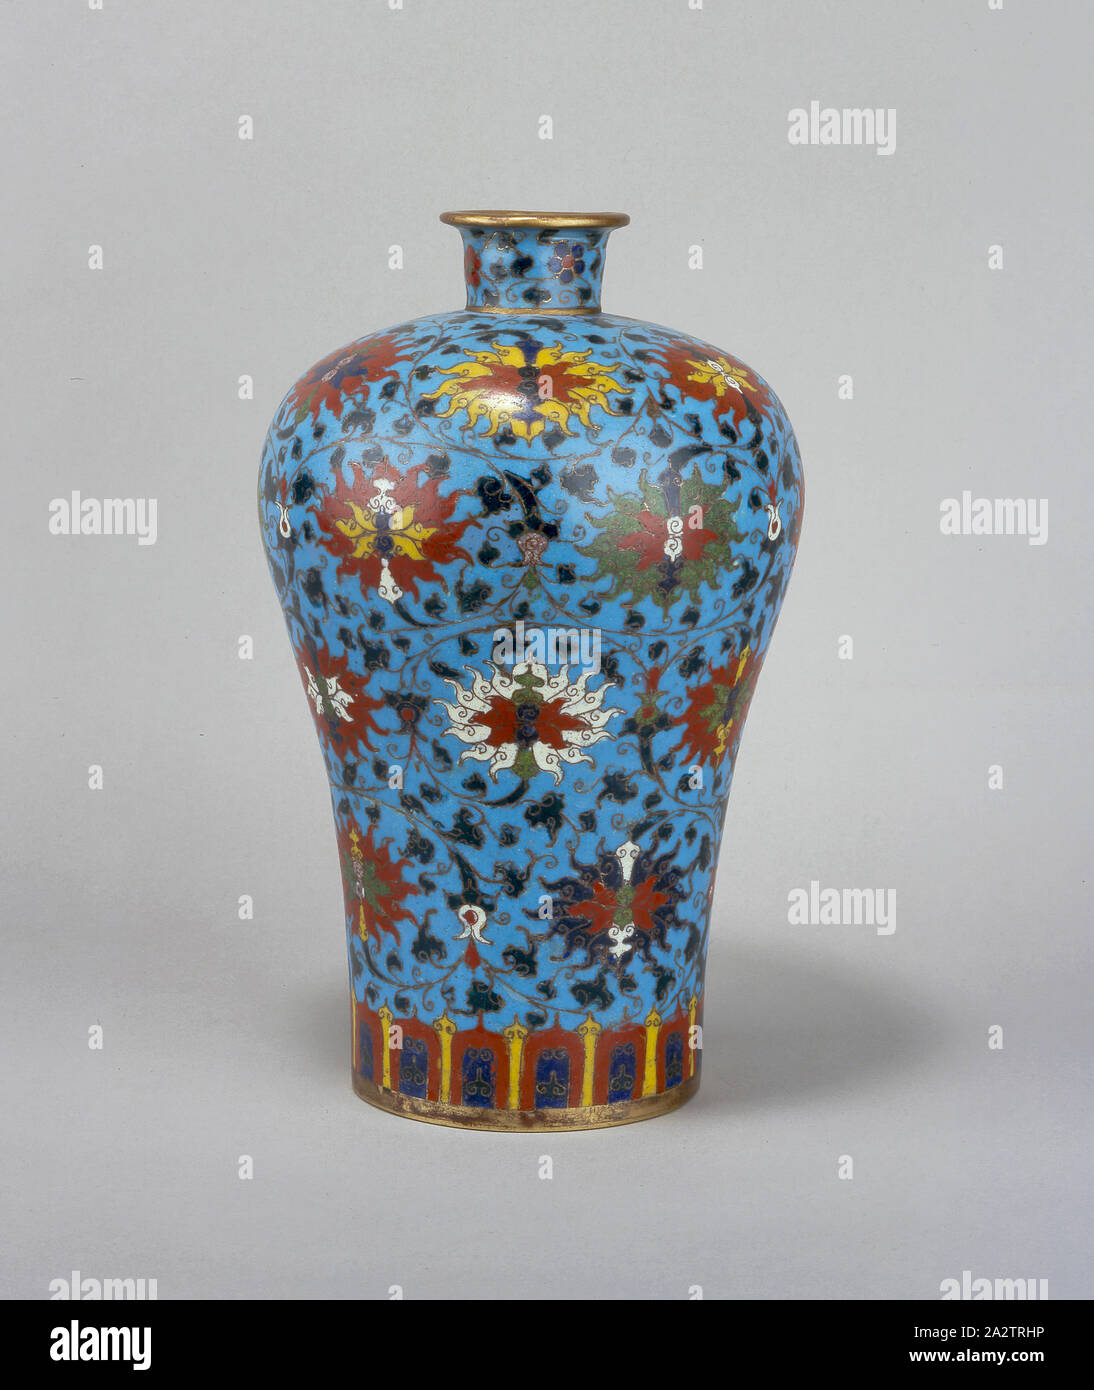 cloisonne vase with floral design, Unknown, Ming dynasty, 1550-1600, cloisonné, Asian Art Stock Photo